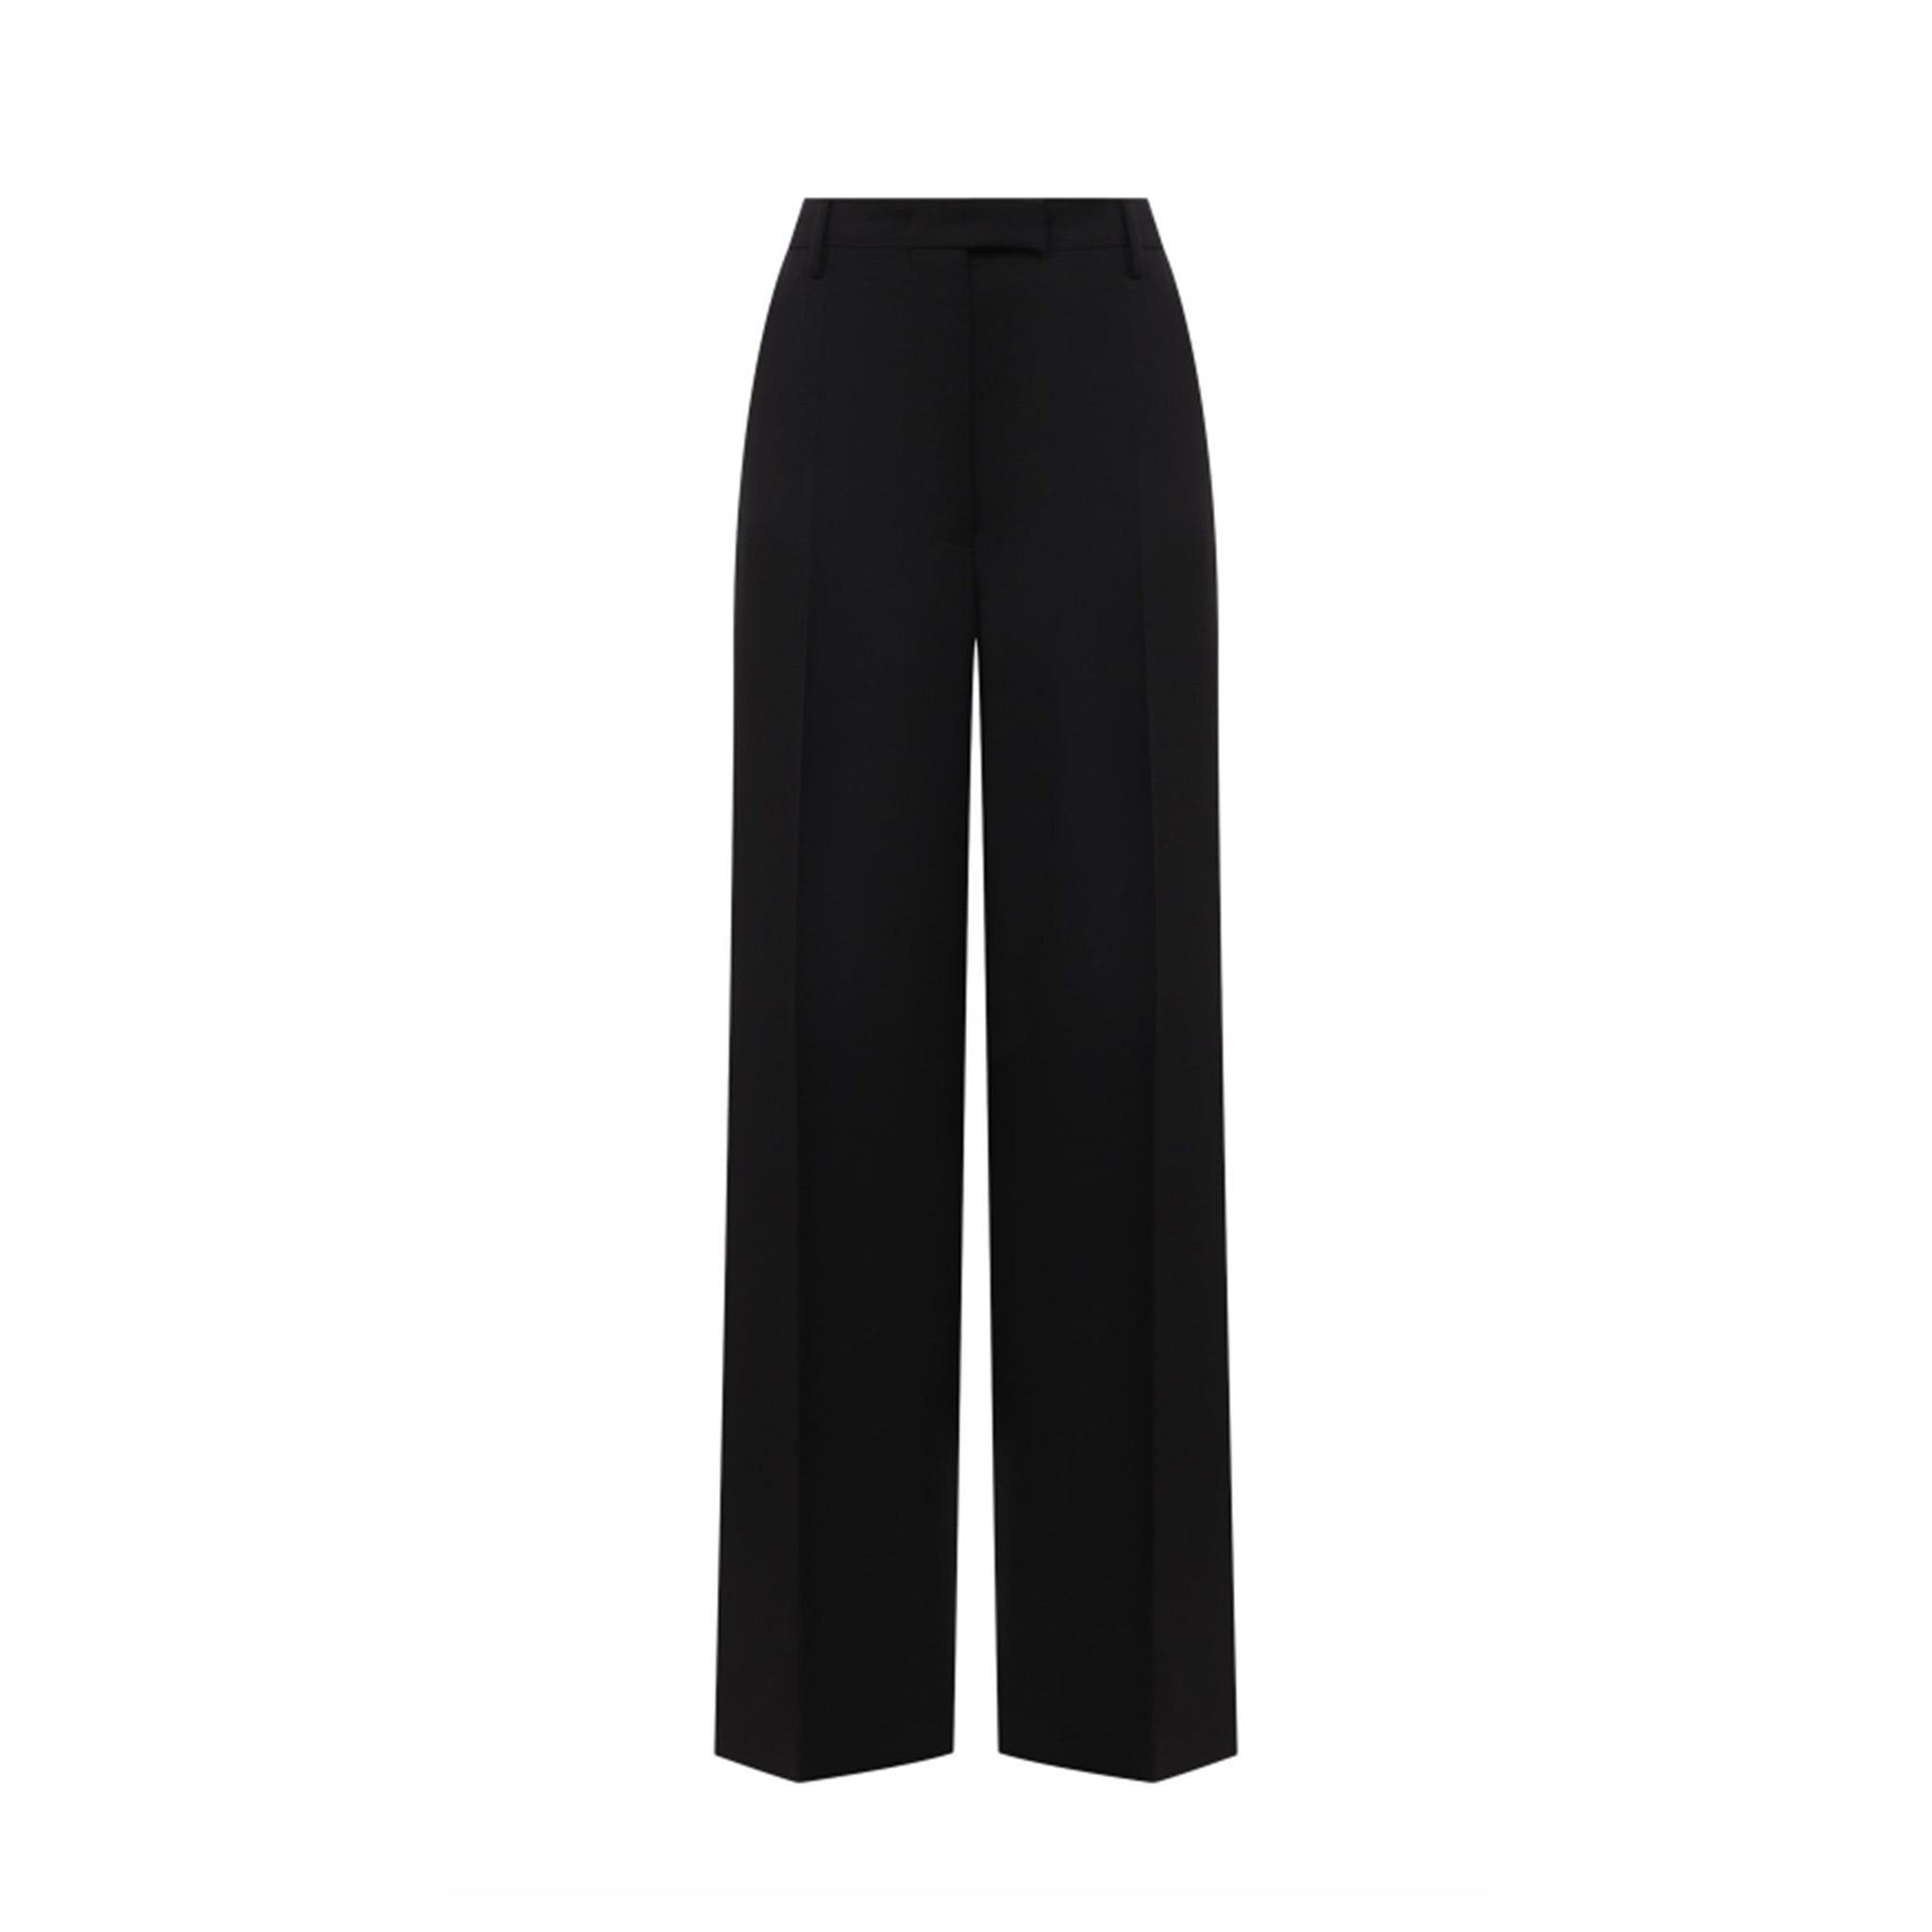 PRADA-Outlet-Sale-Prada Wool Pants-WOMEN CLOTHING-BLACK-42-ARCHIVIST